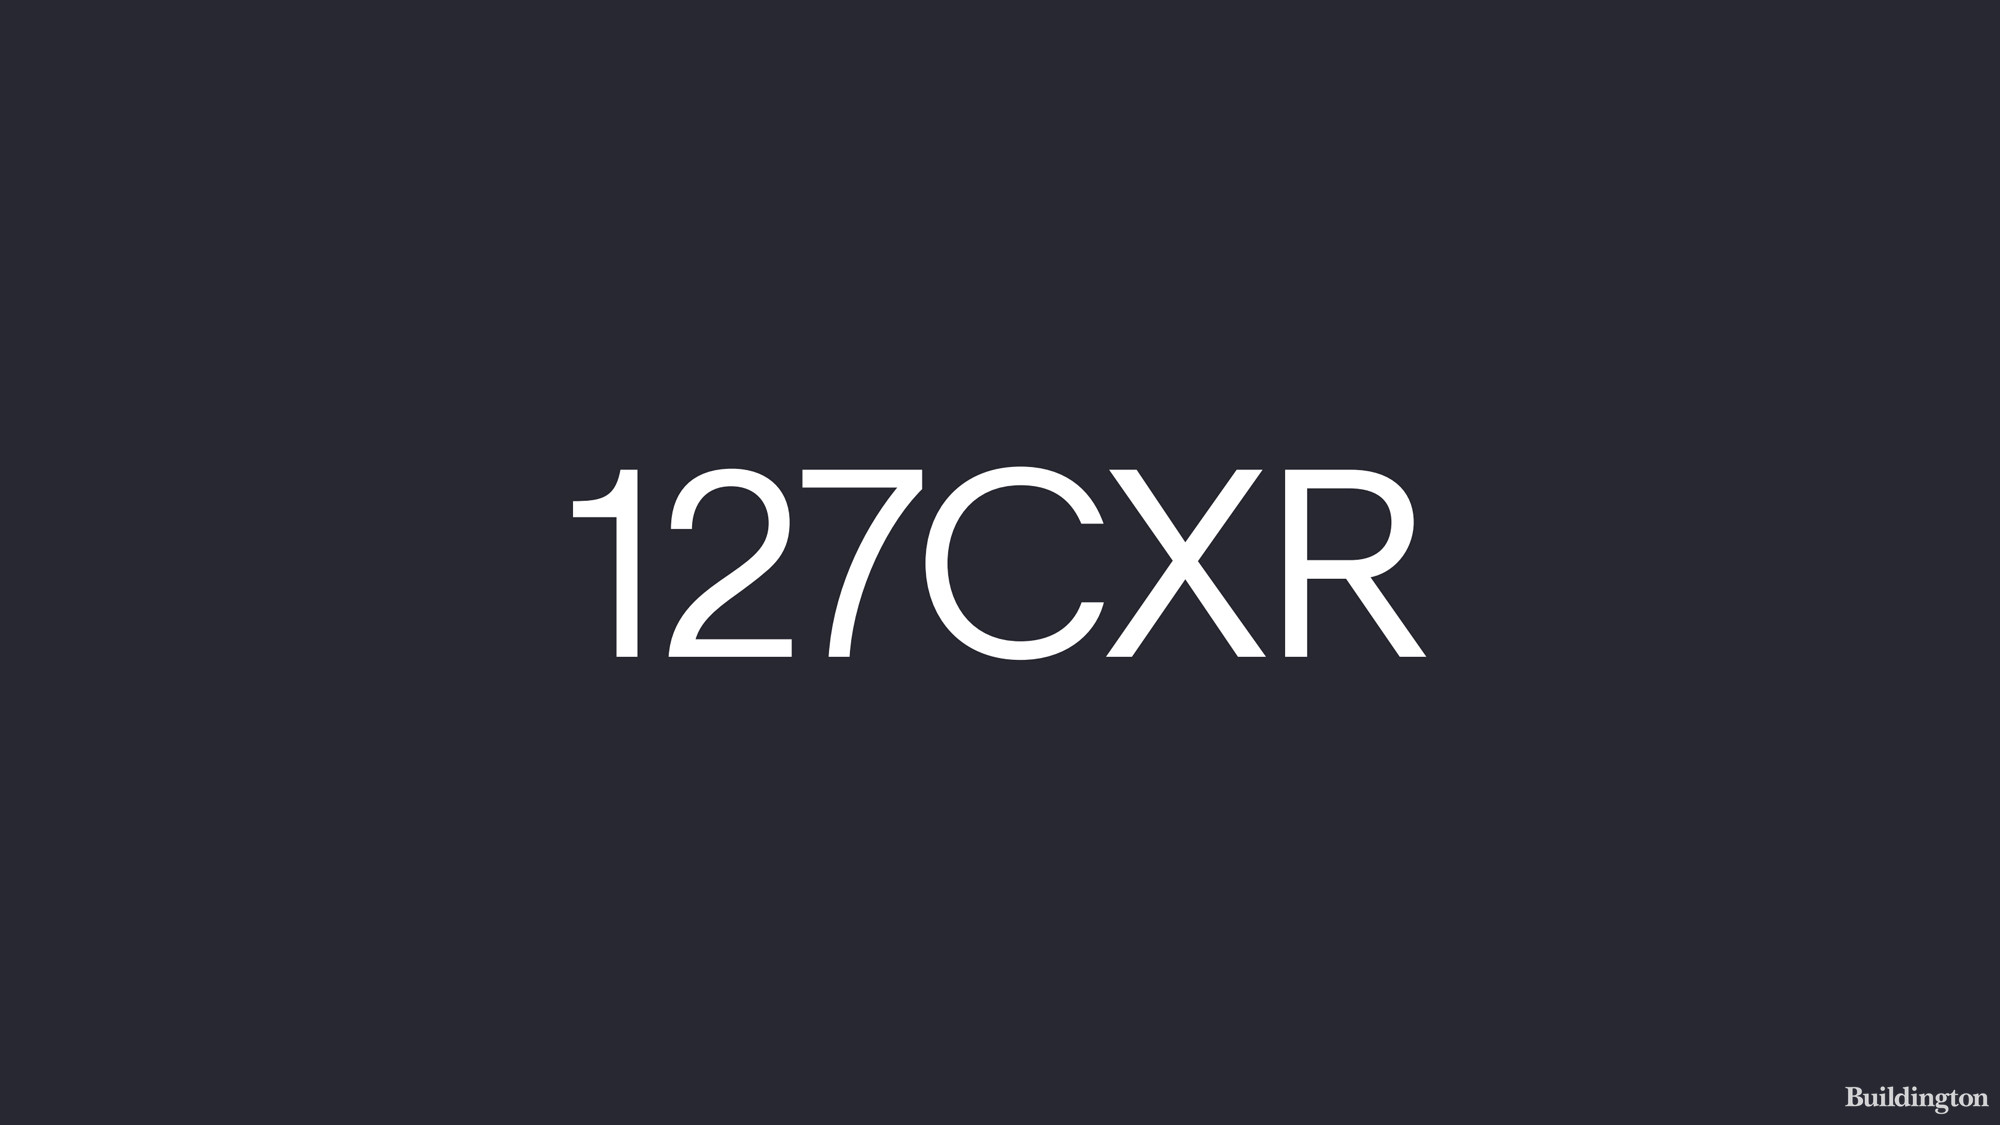 127 Charing Cross Road development logo cover